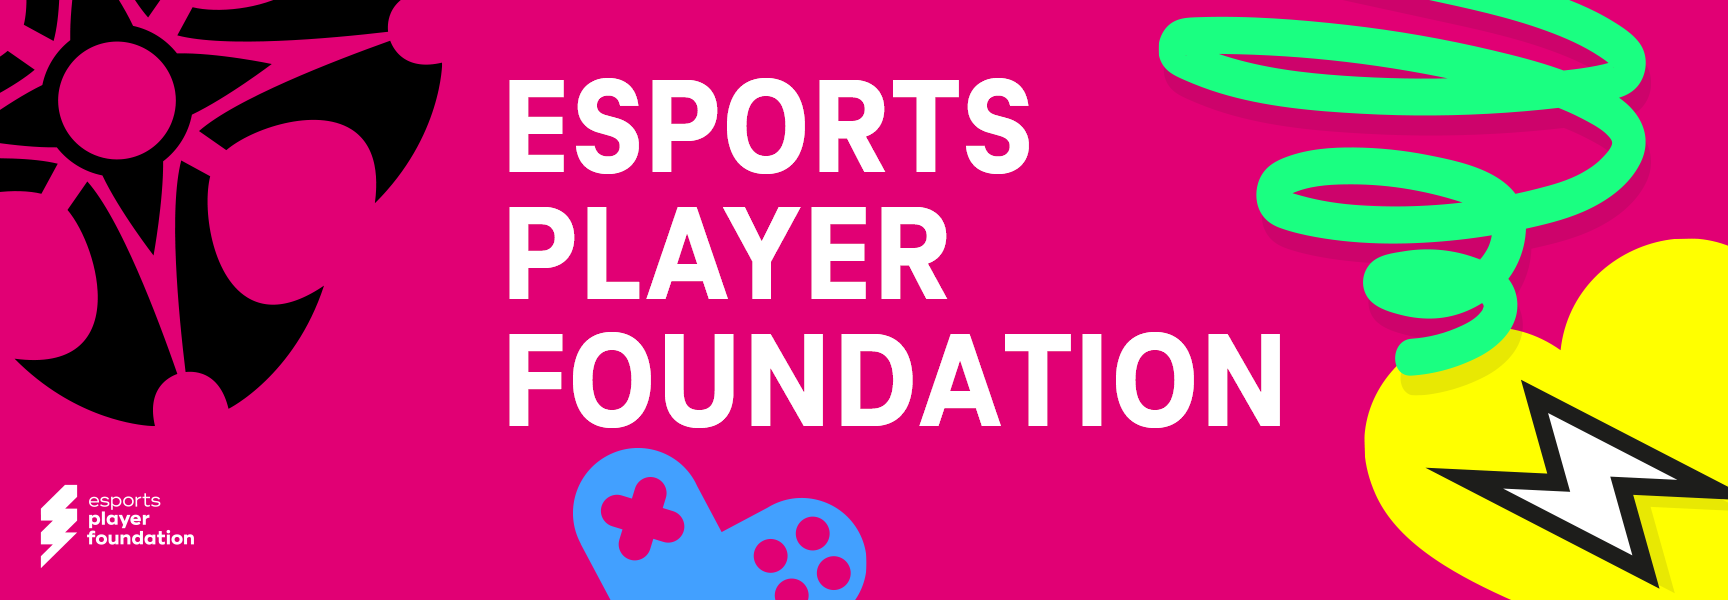 Brawl Stars - esports player foundation